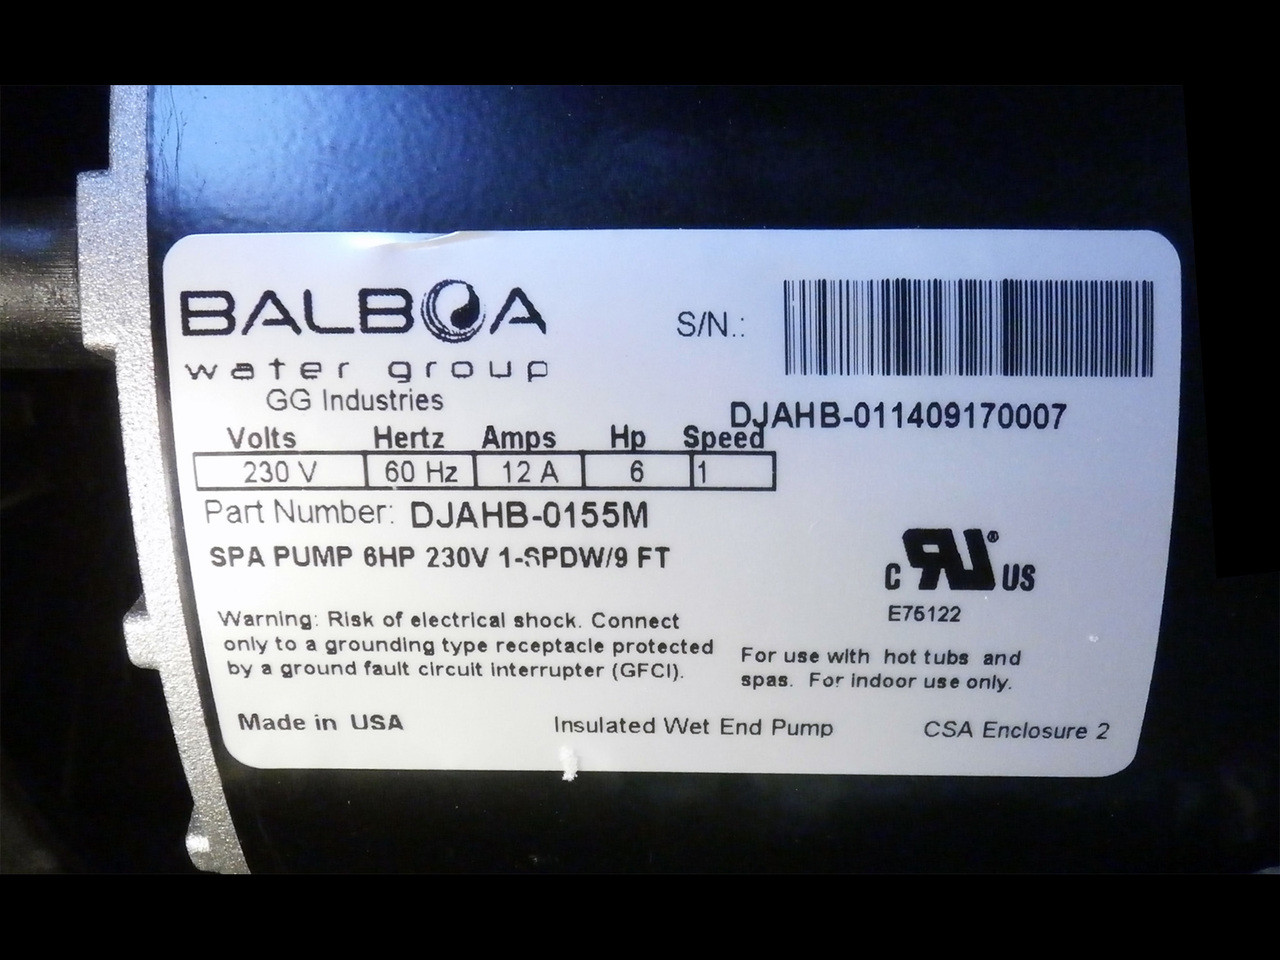 X320375 - Balboa Label View